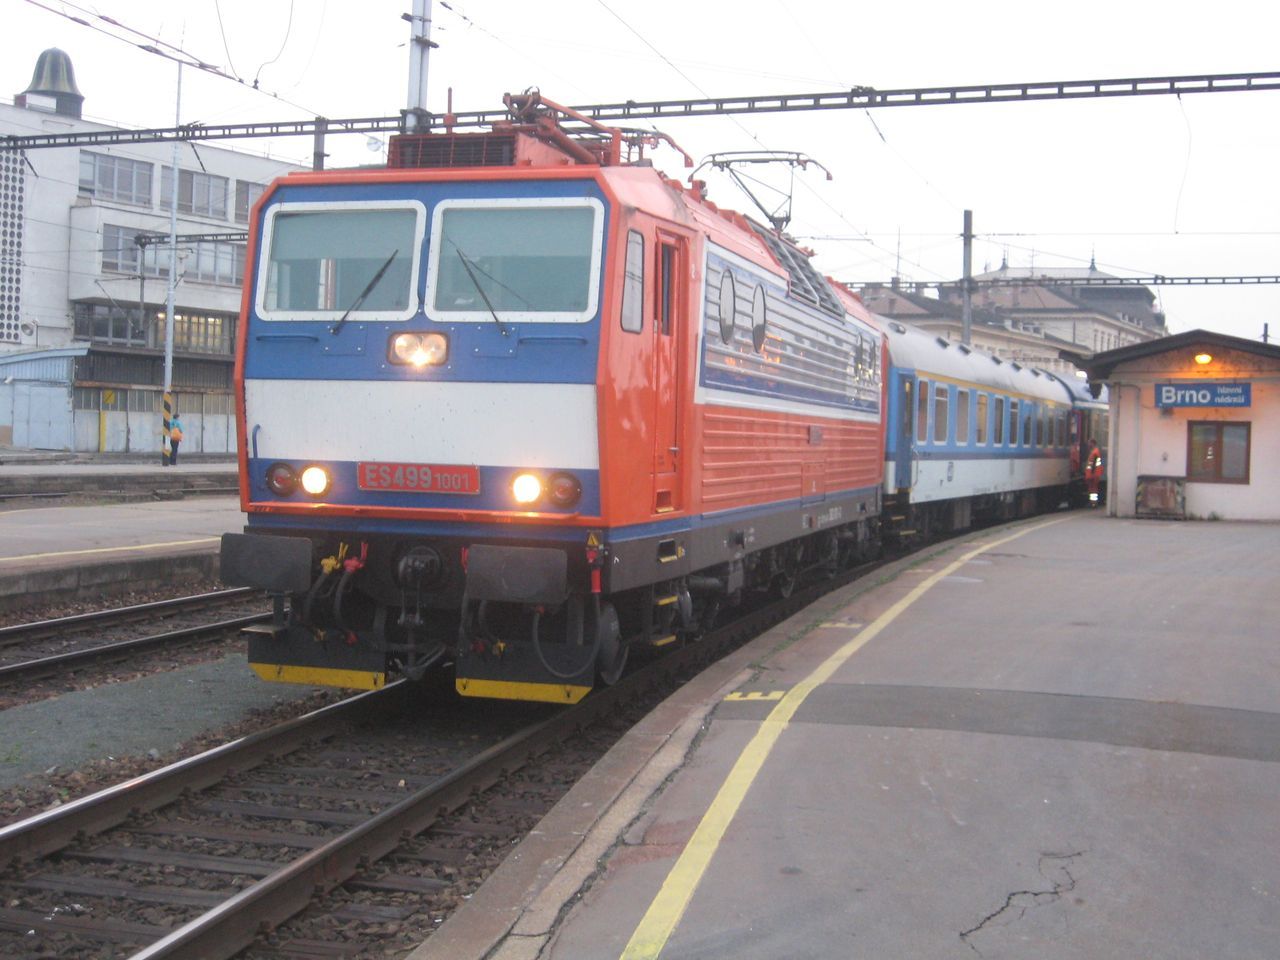 Prototypov eso ES 499.1001 (362.001) D ve stanici Brno hl.n. po pjezdu R 983 Vysoina. 